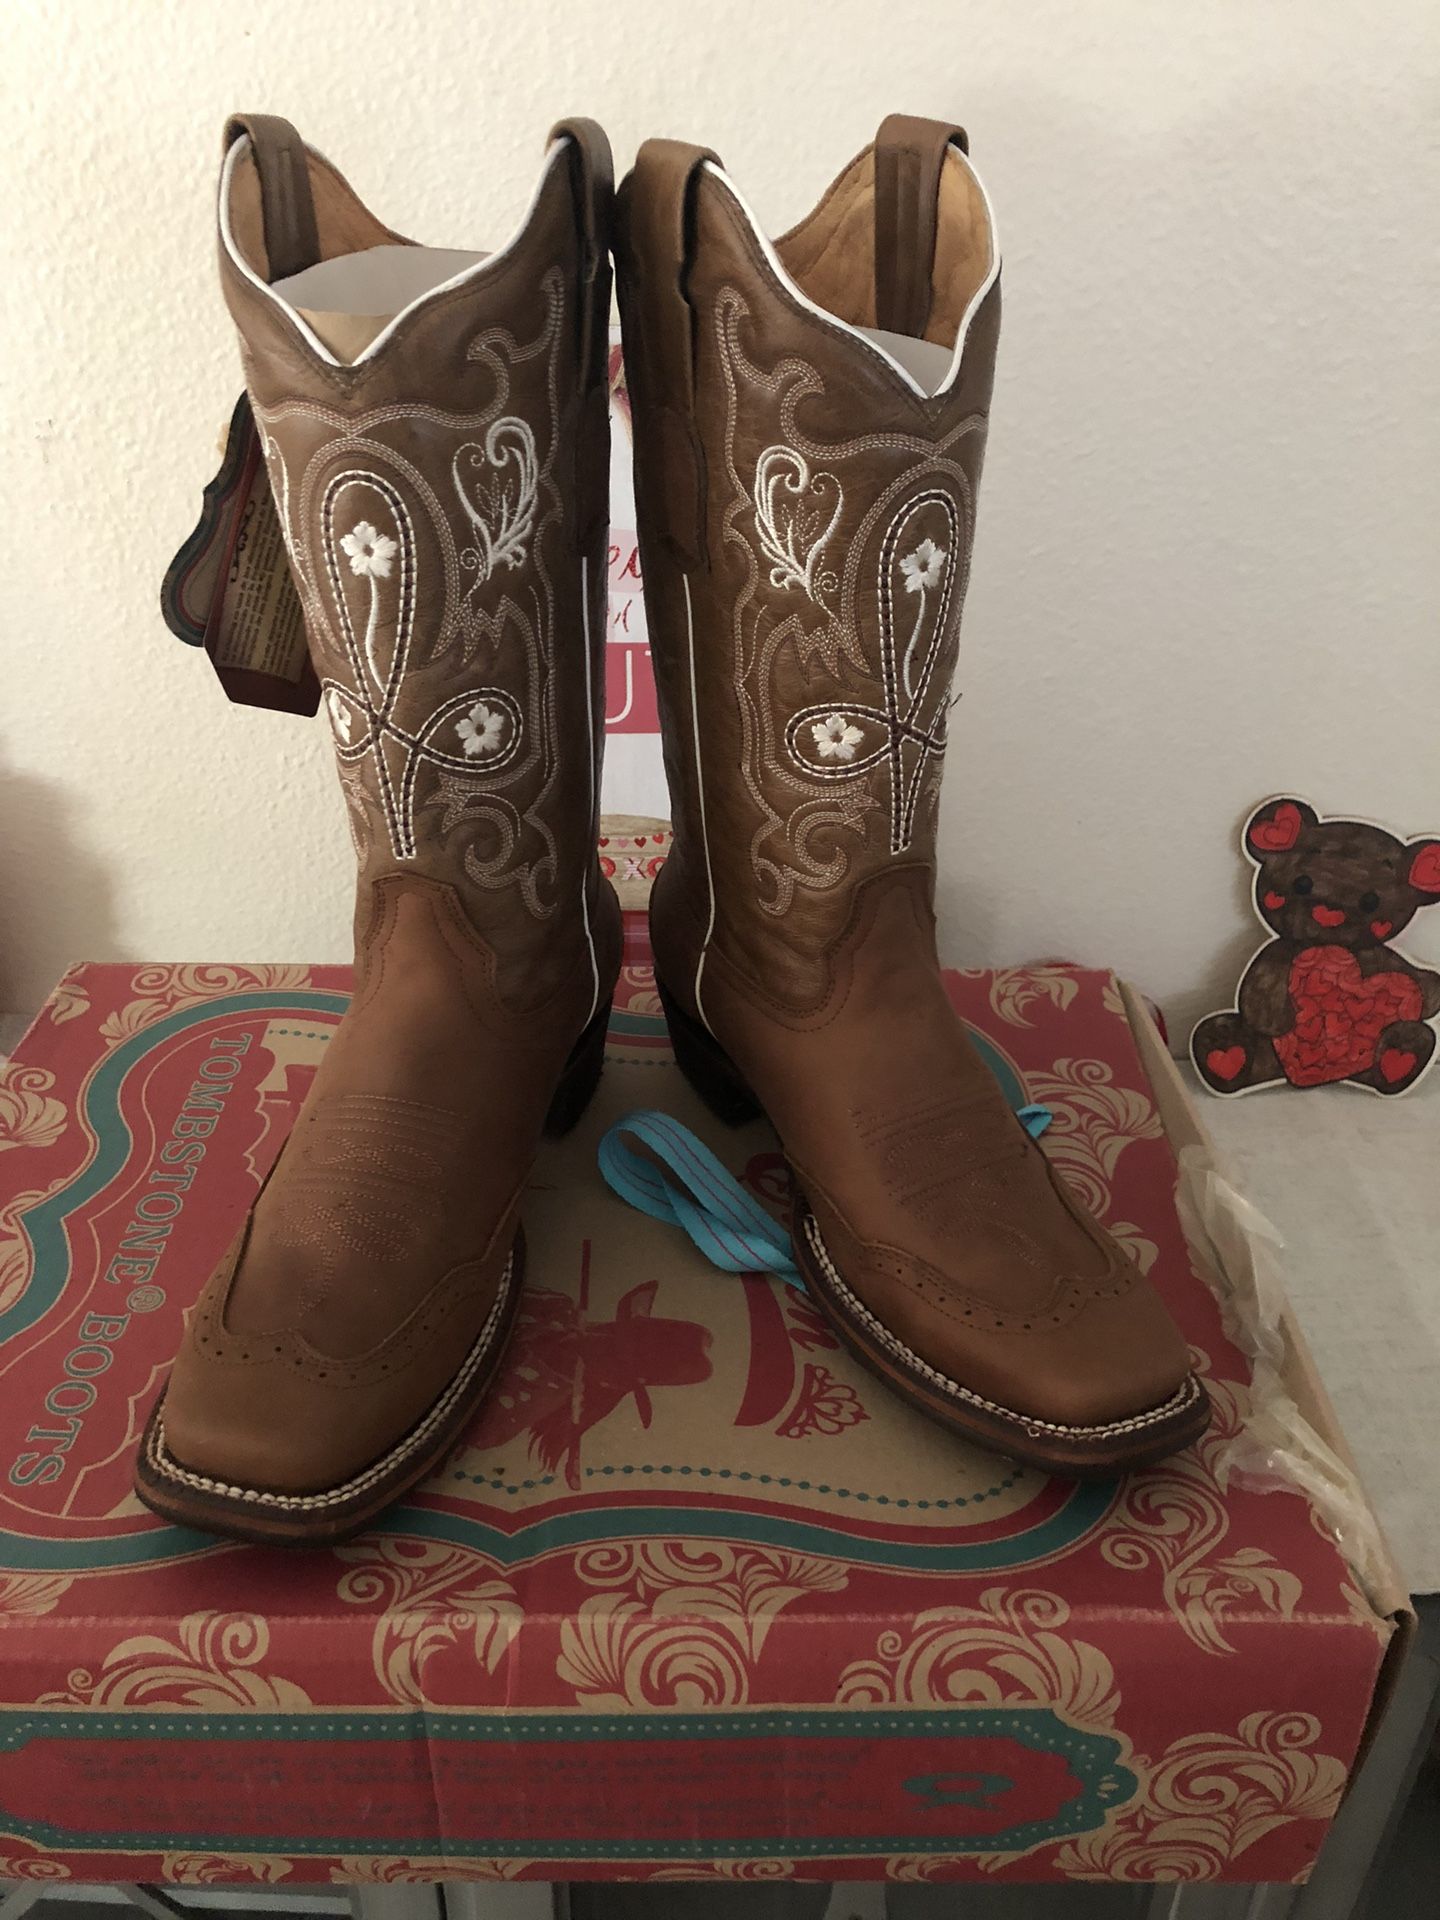 New  Women’s boots